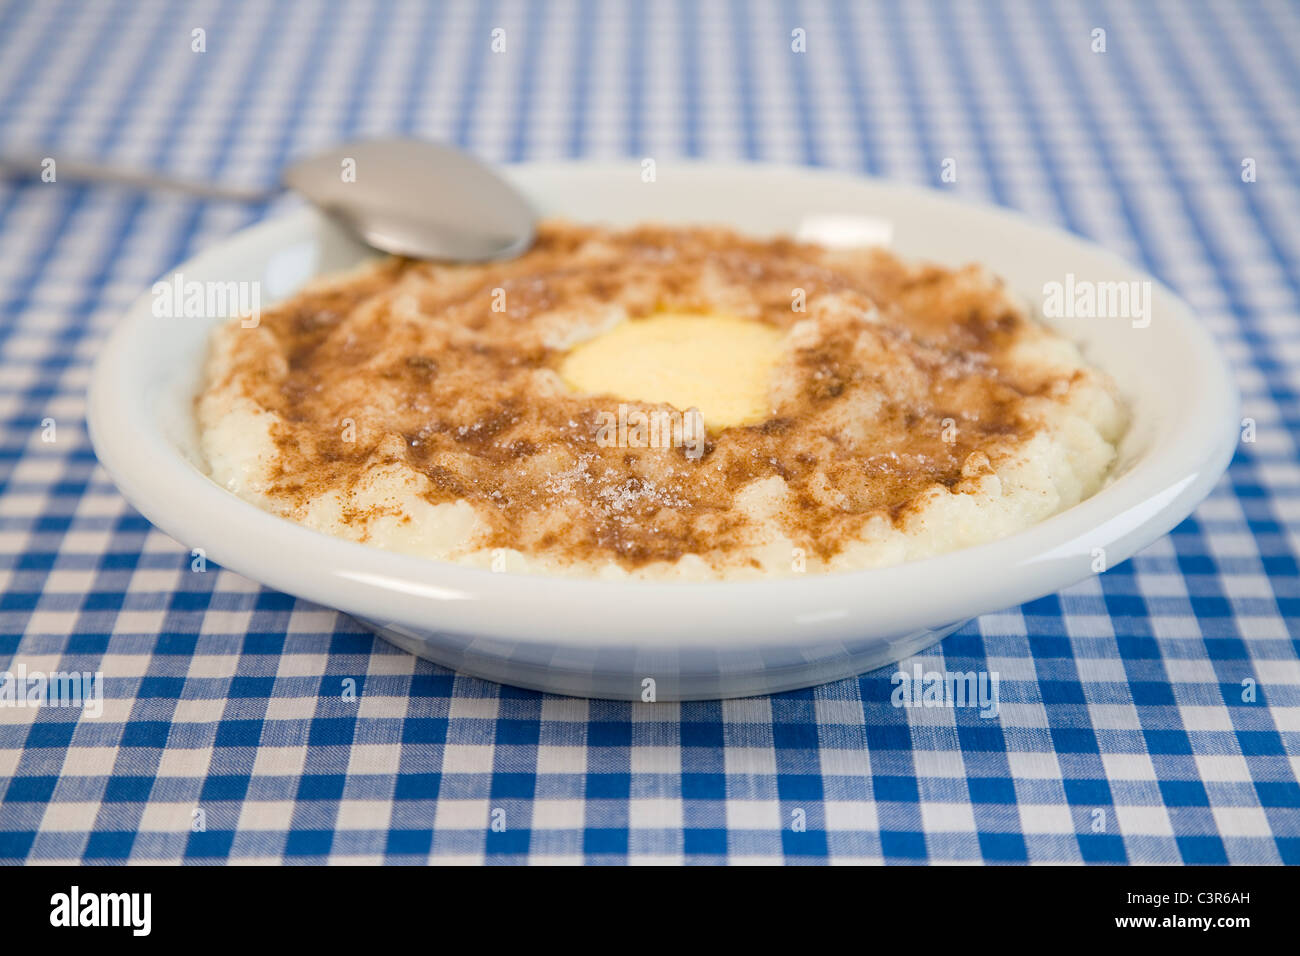 Rice porridge with cinnamon and sugar Stock Photo